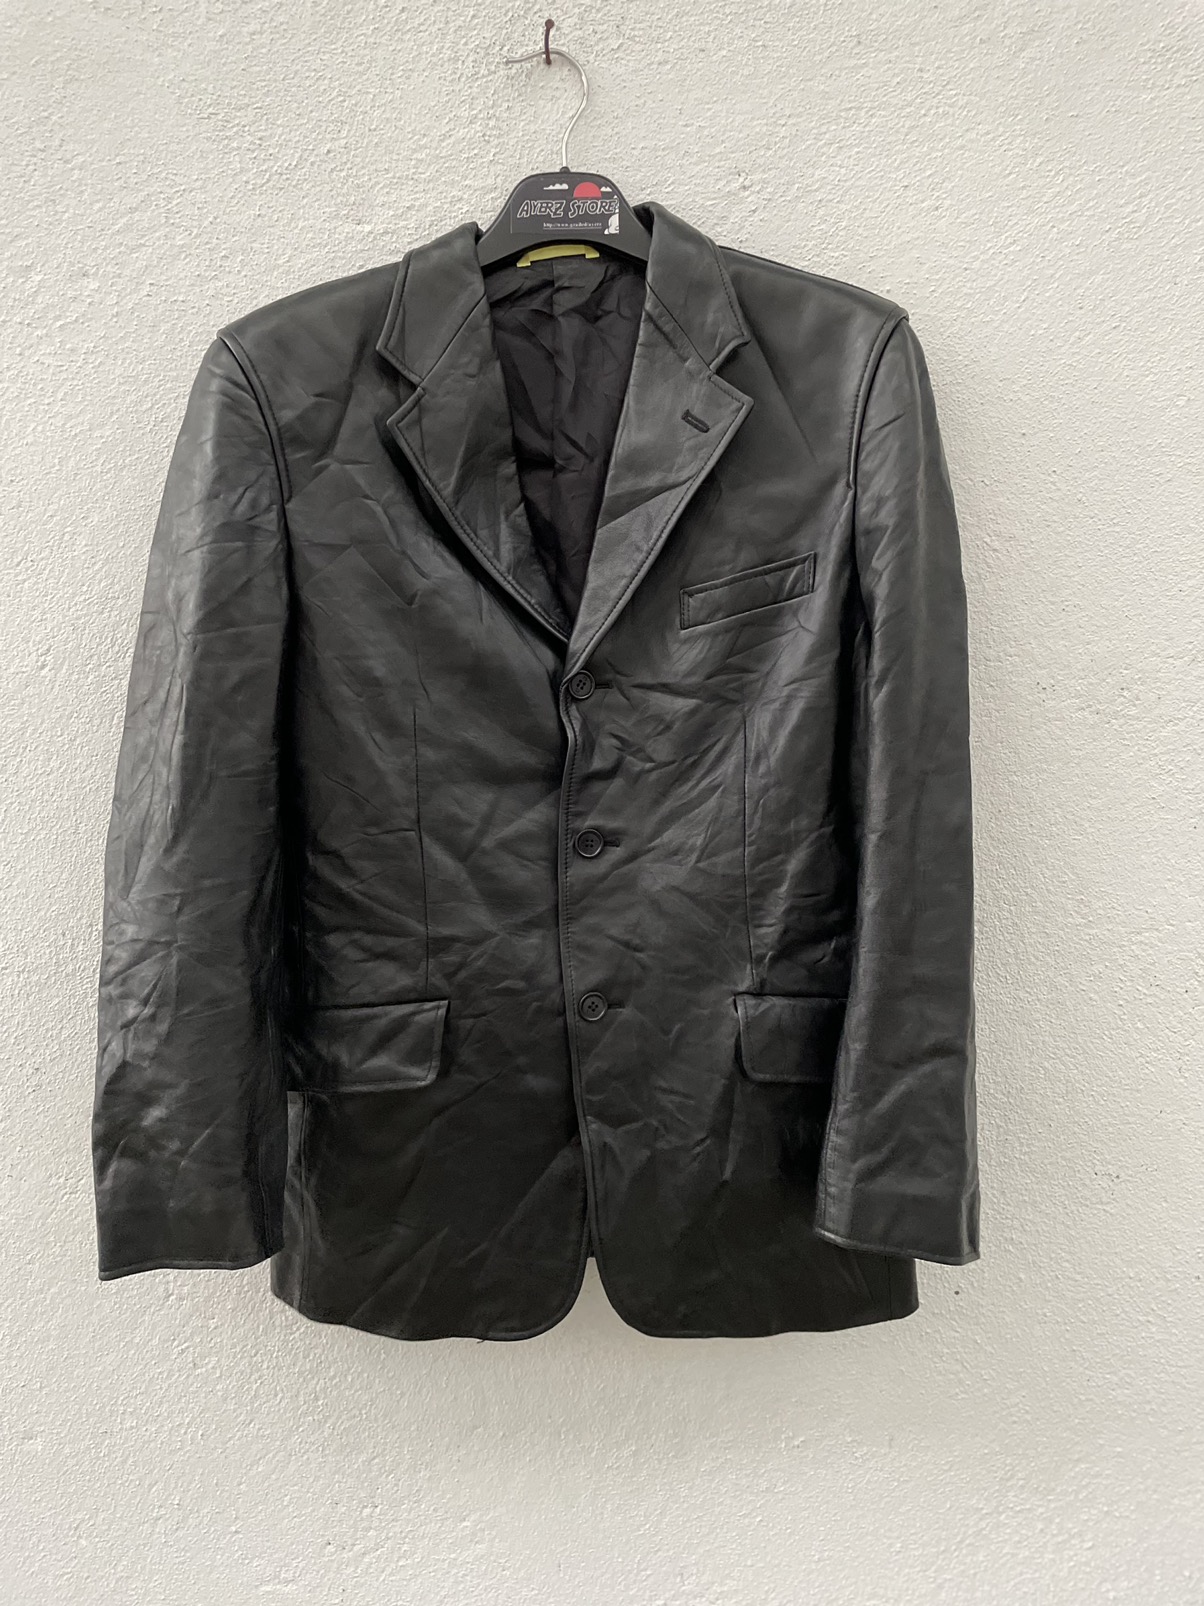 Vintage paul smith london leather jacket button up S sz